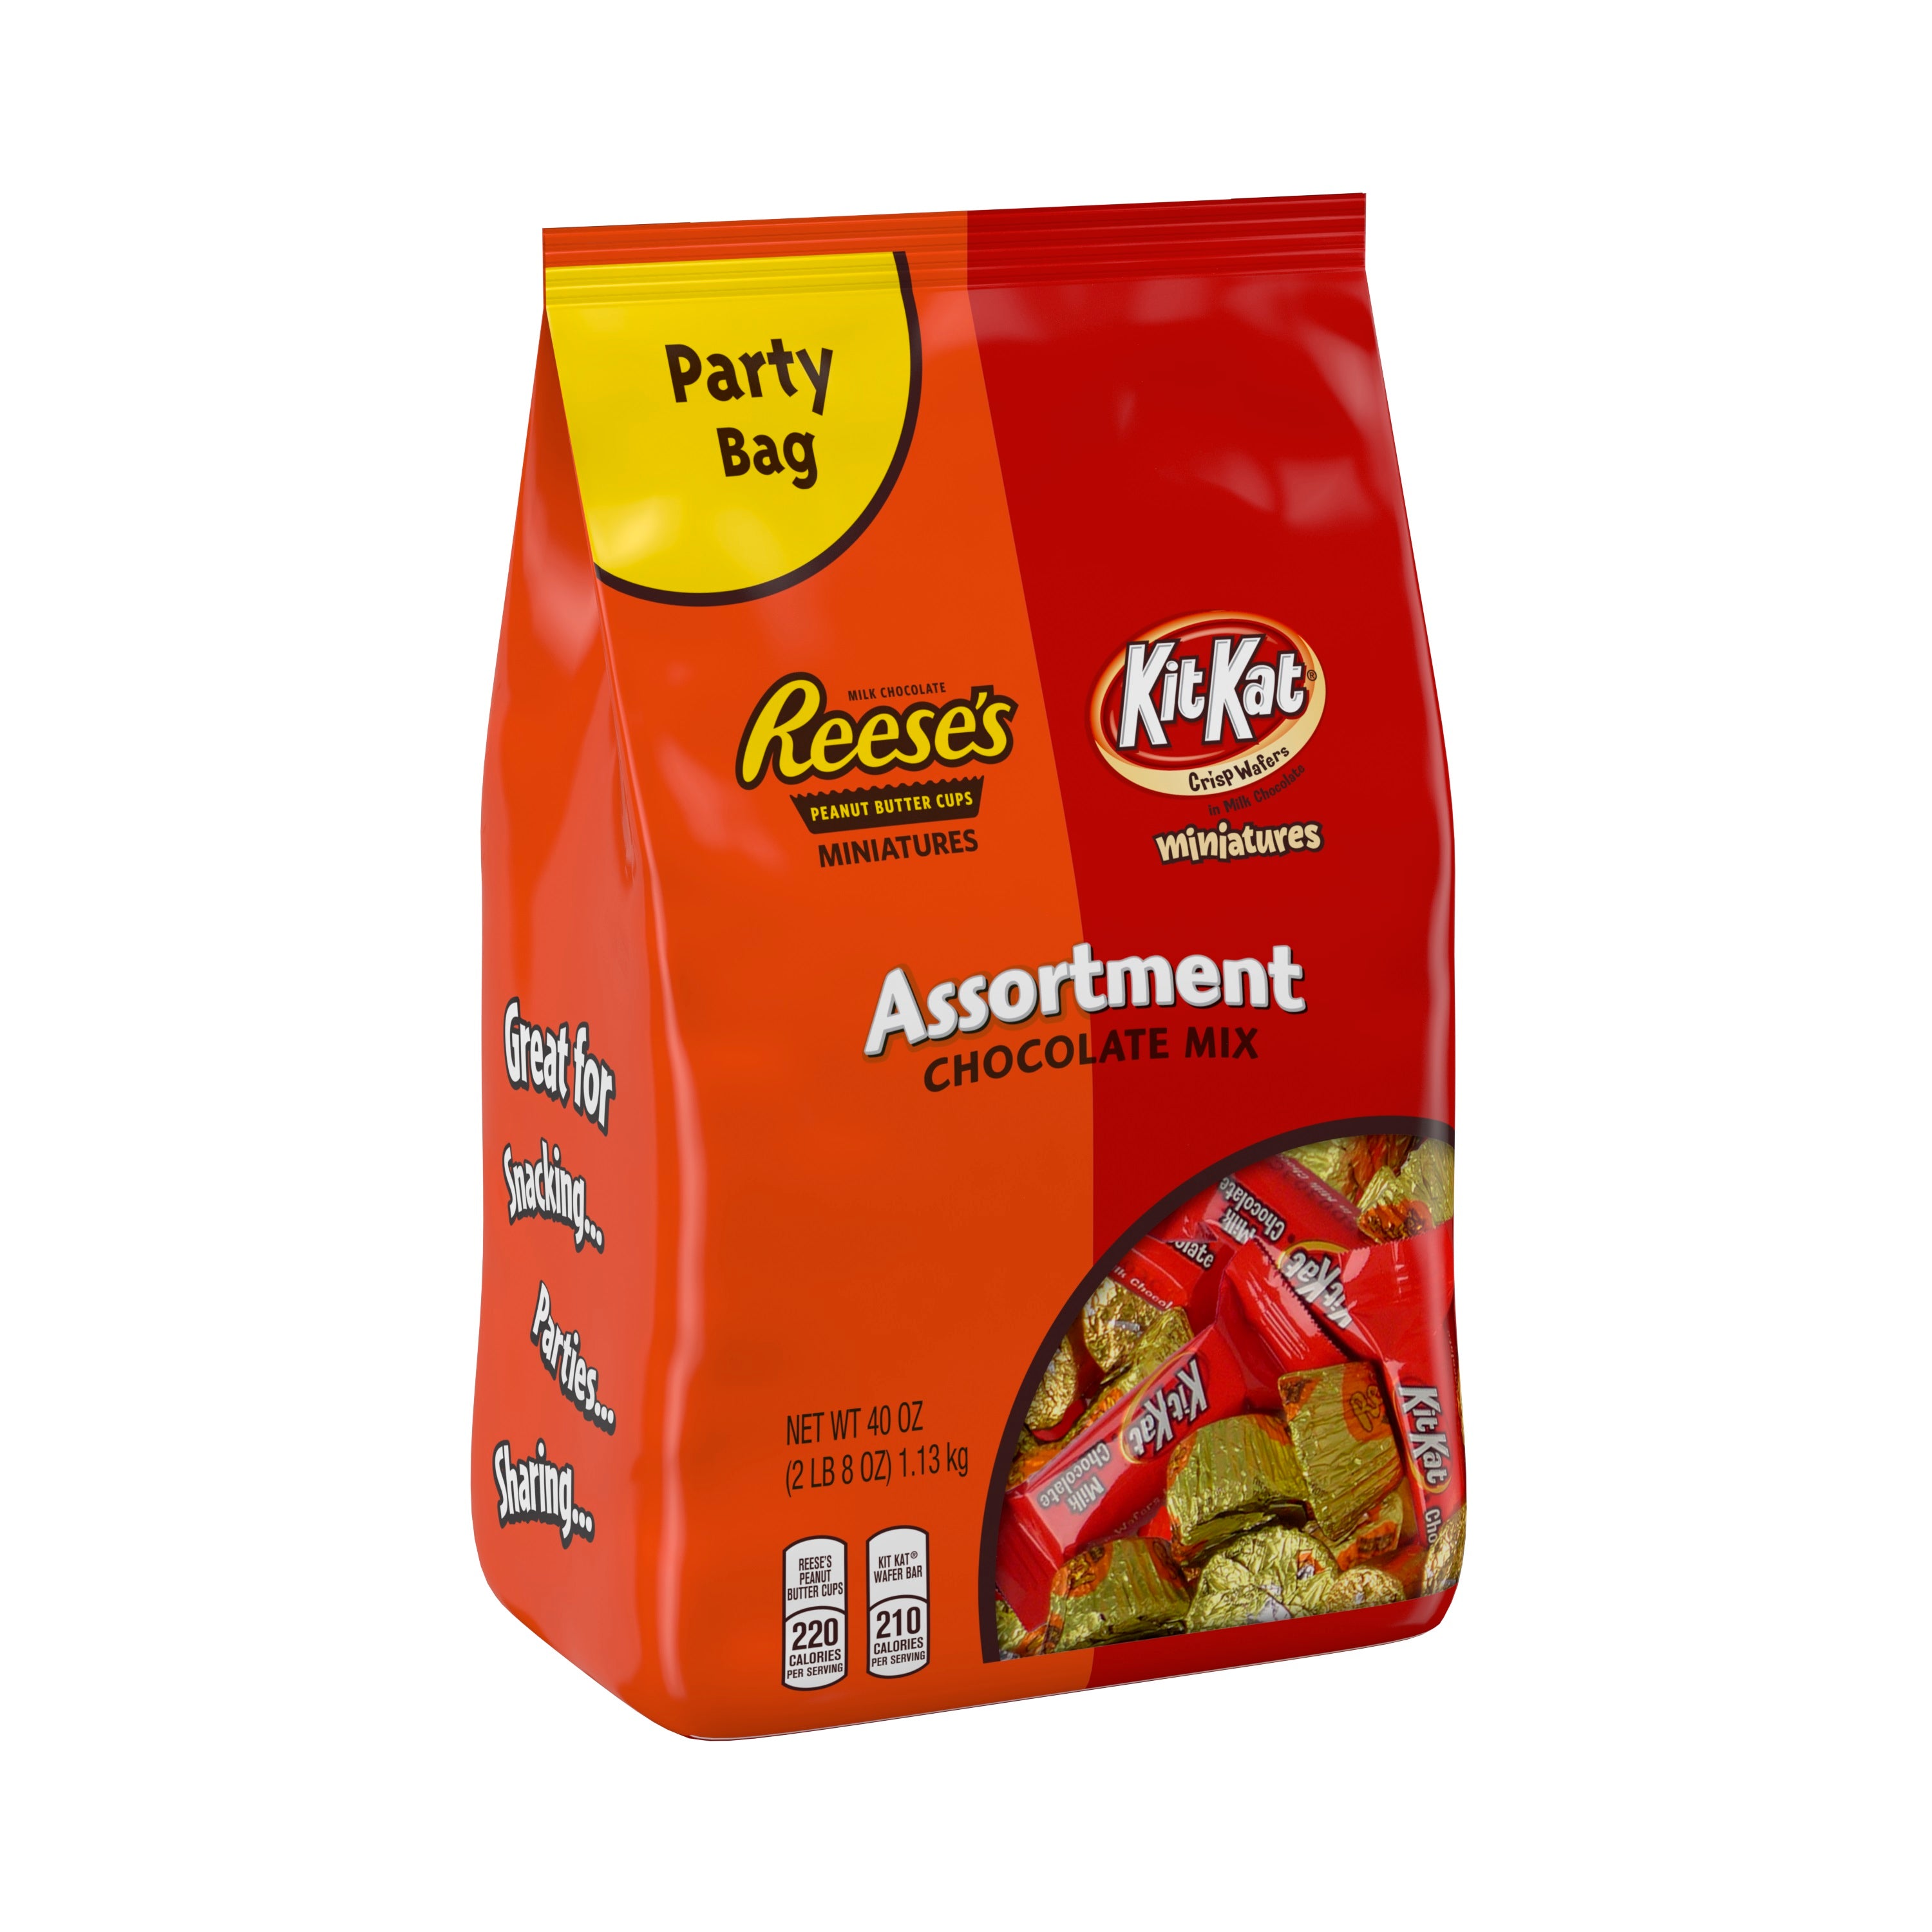 Hershey's Assortment, Reese's Peanut Butter Cups Miniatures, Kit Kat Crisp Wafers Minis - Party Bag